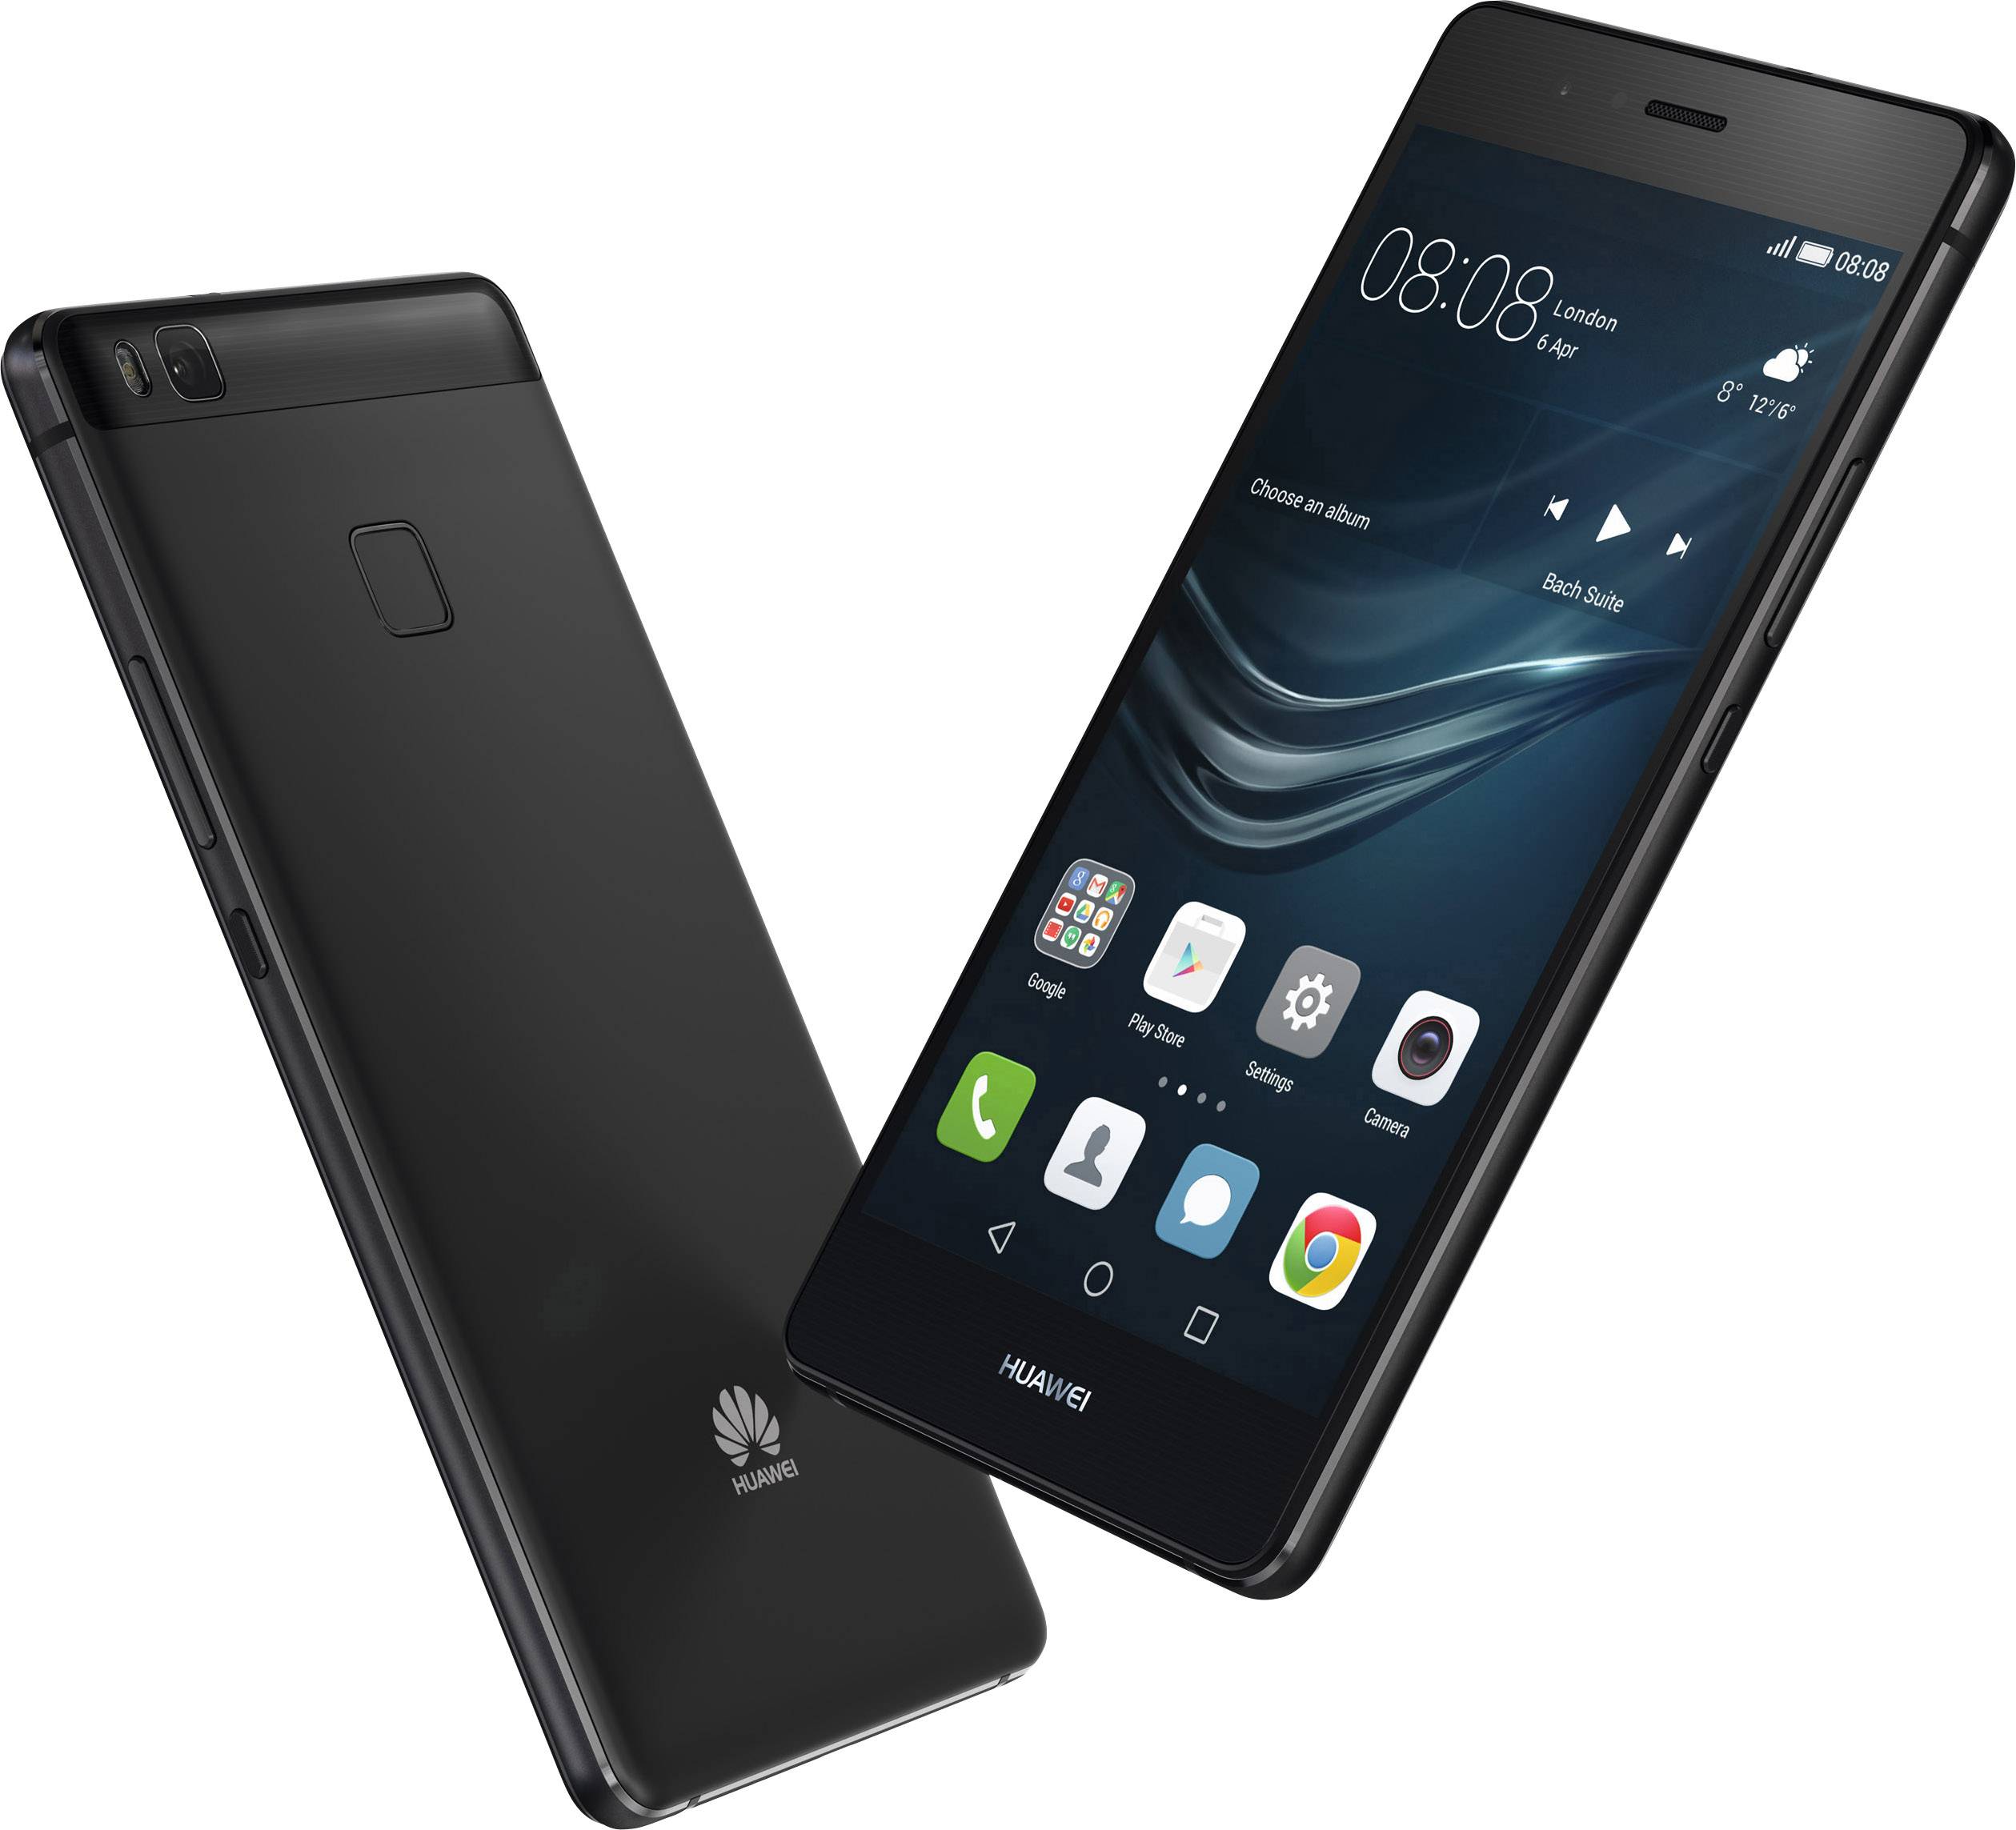 HUAWEI P9 Lite Smartphone 16 GB (5.2 inch) Black Android™ 6.0 Marshmallow slot Conrad.com